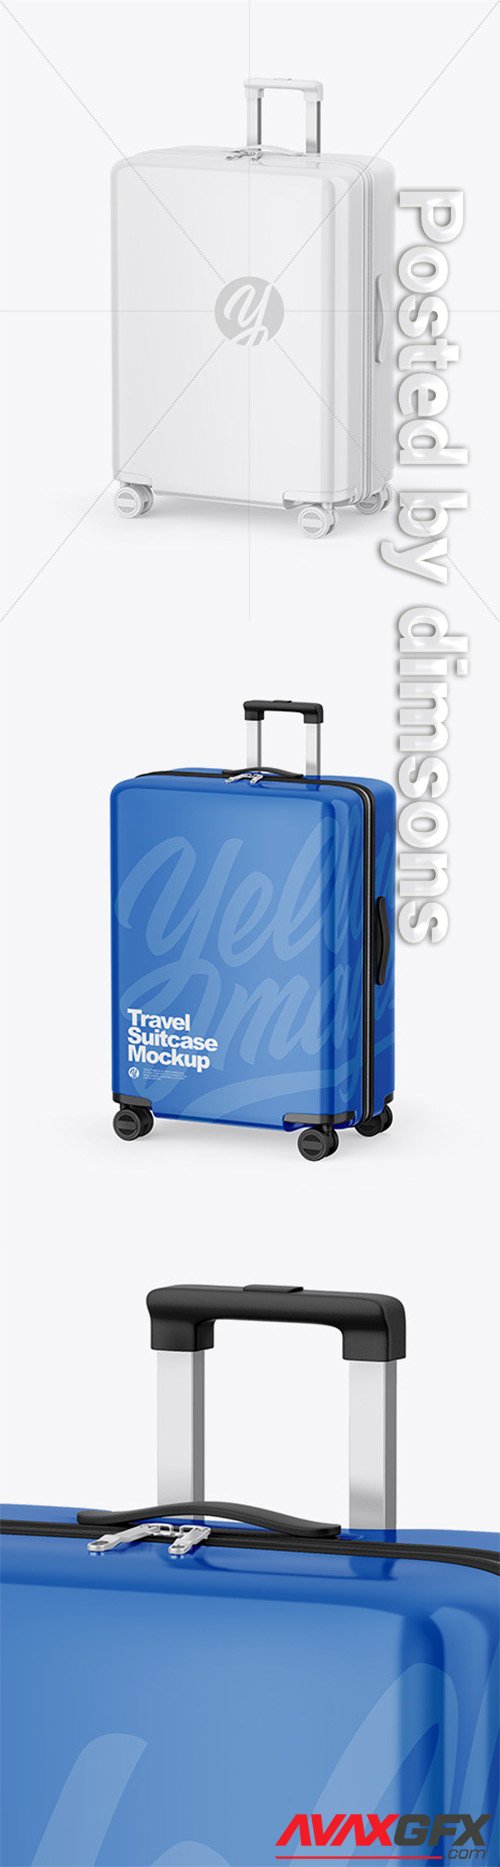 Glossy Travel Suitcase Mockup 65014